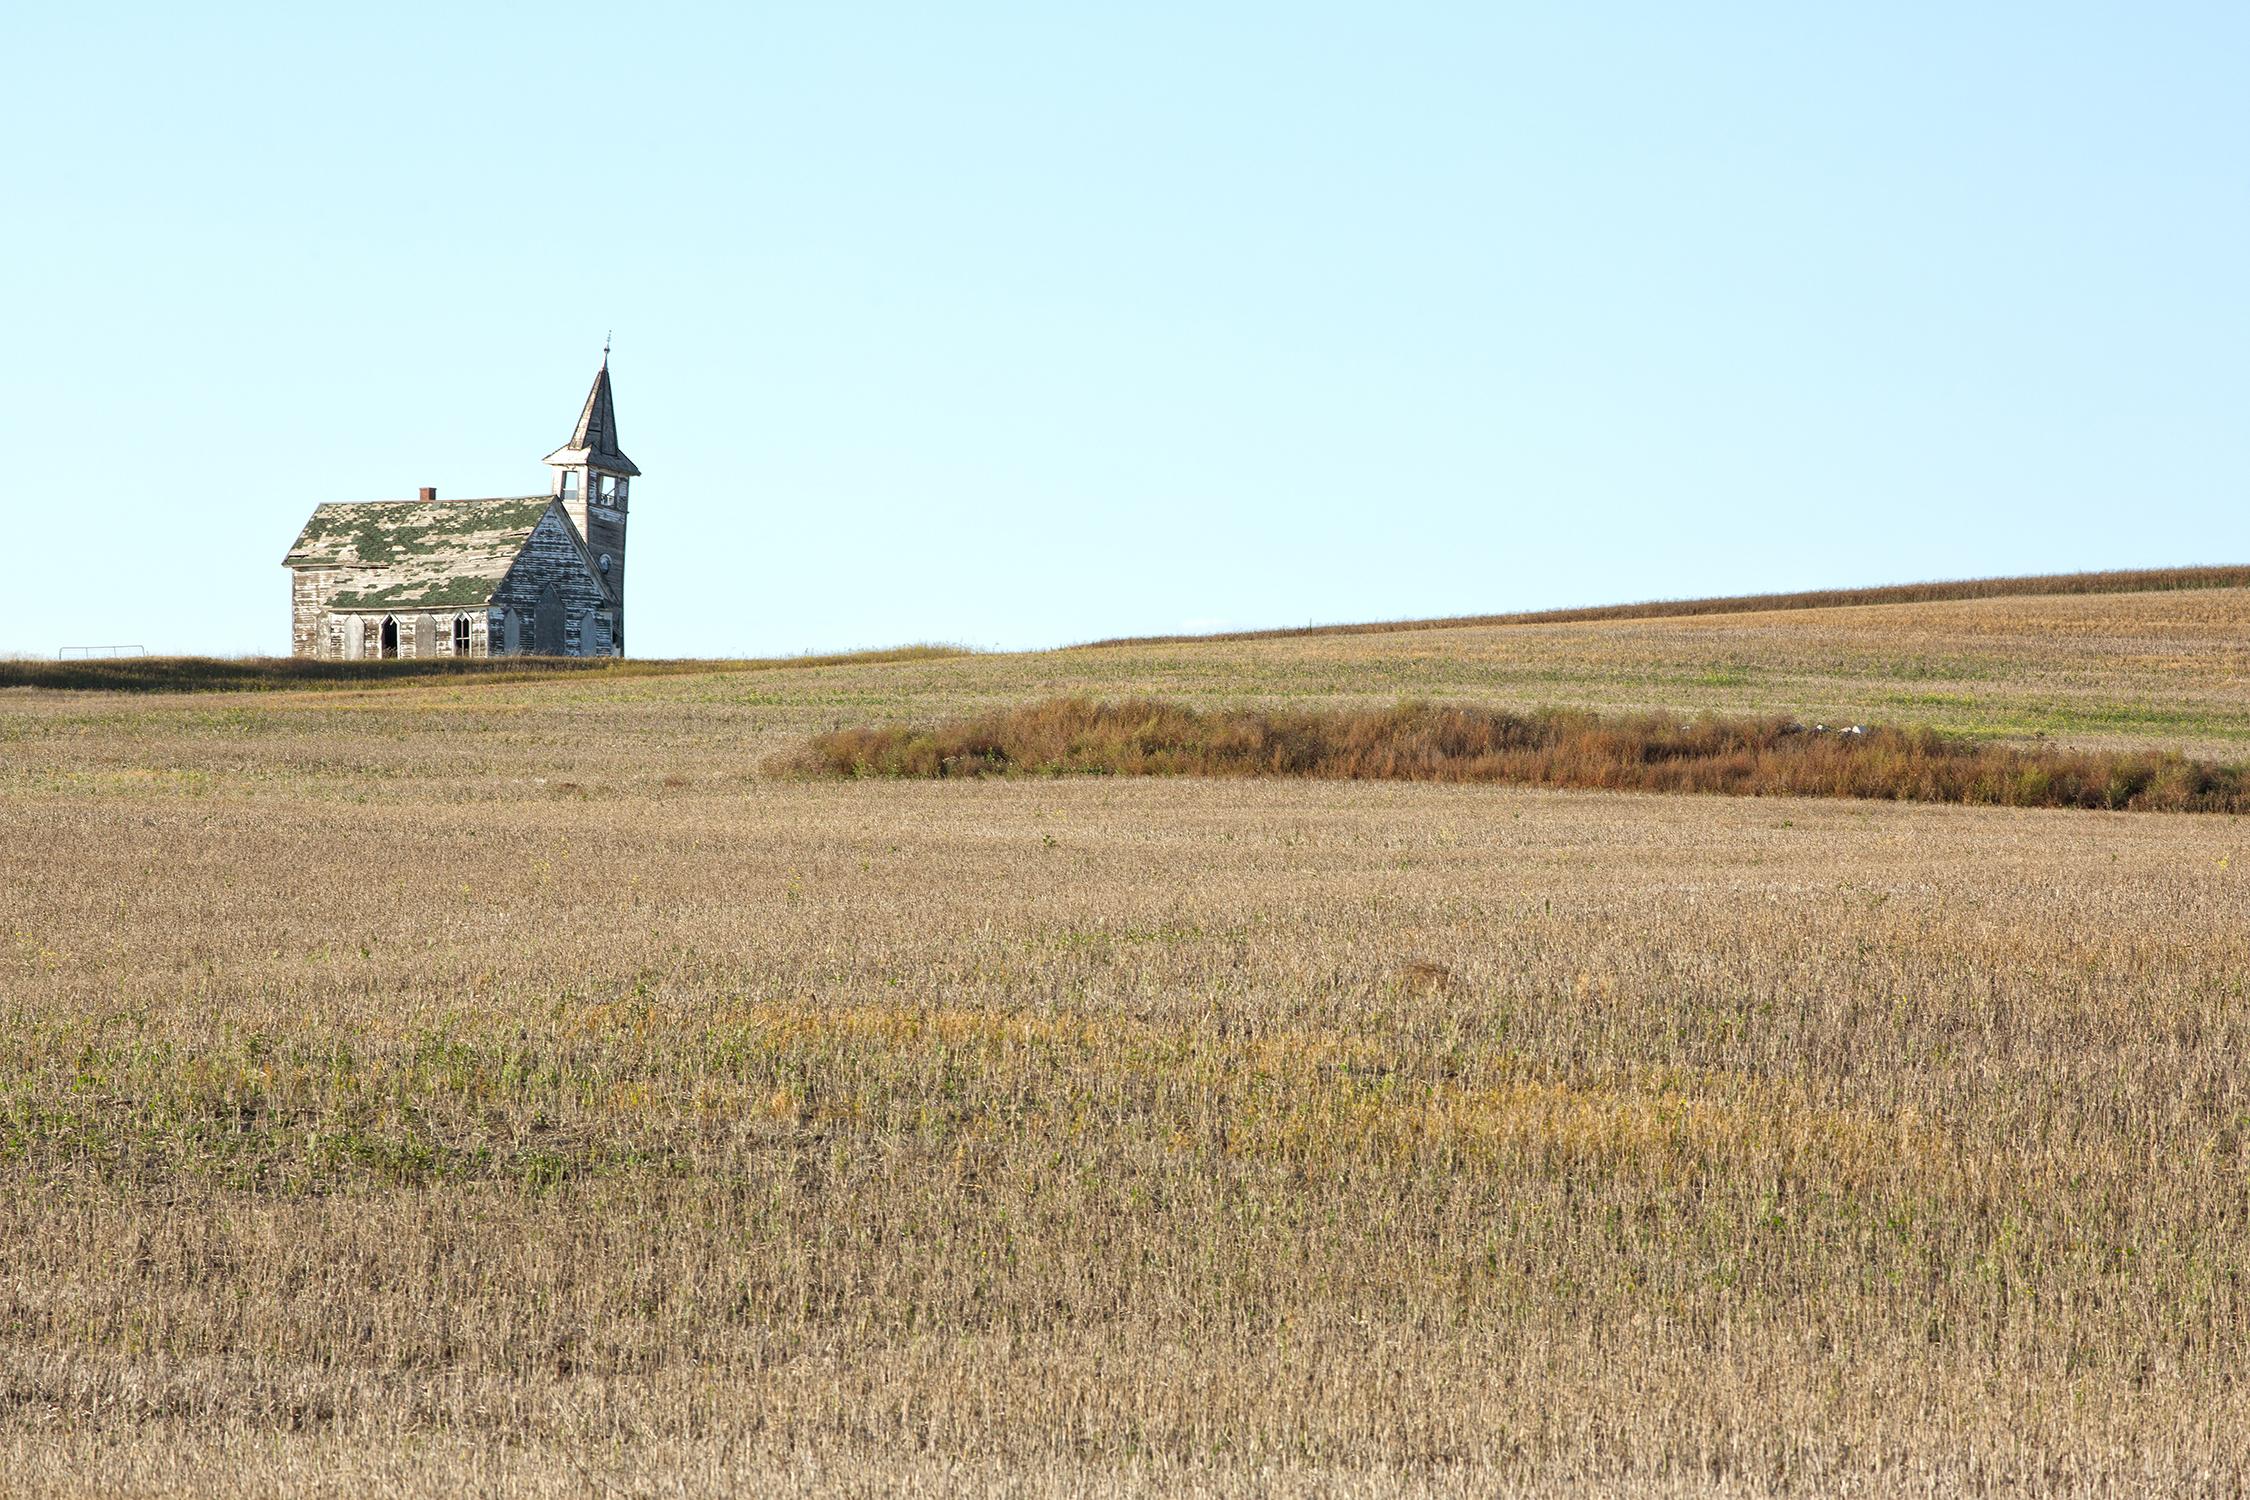 Rebecca Skinner Color Photograph - "Saint Olaf Church", contemporary, landscape, North Dakota, color photograph